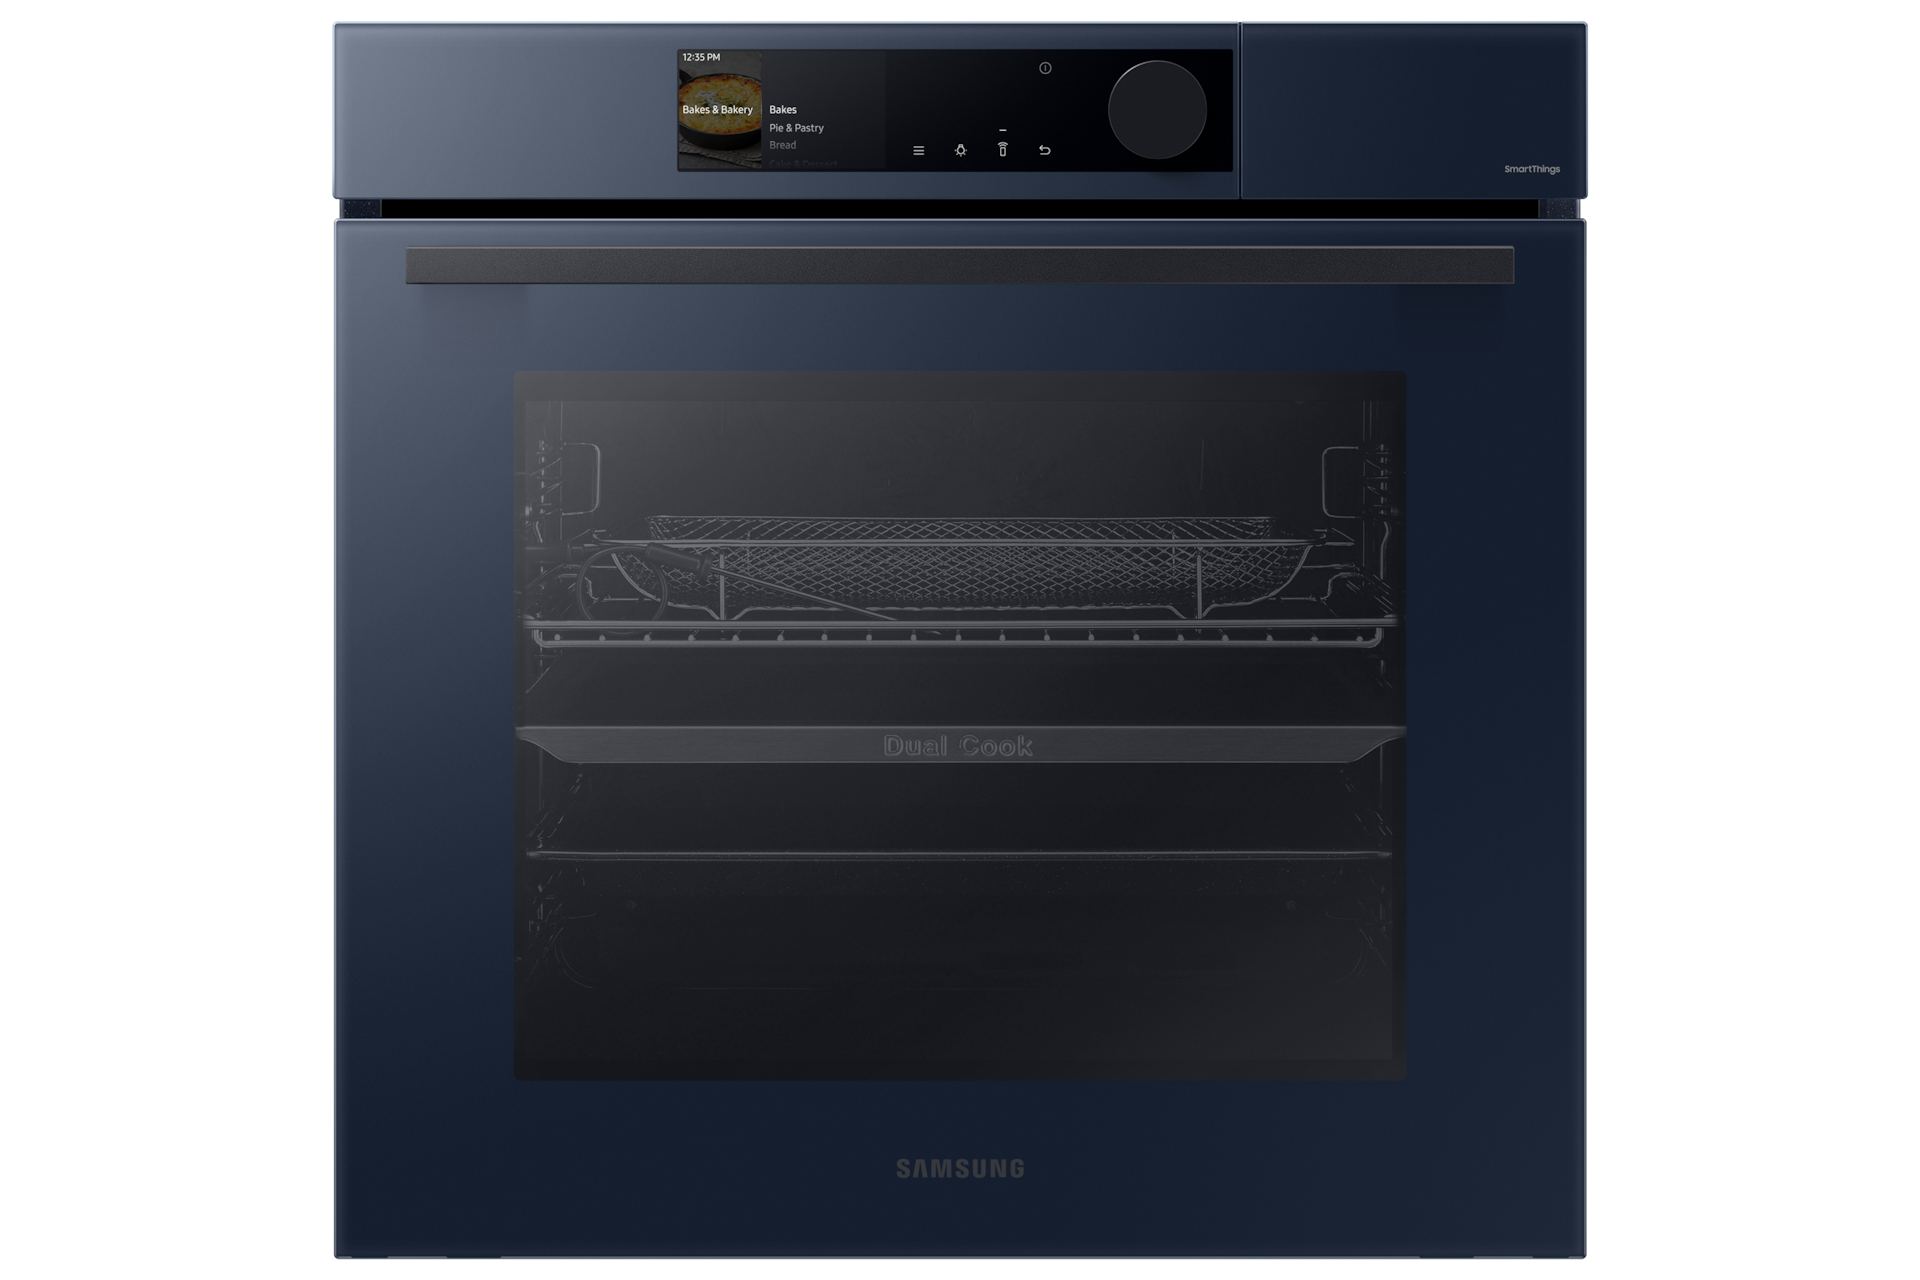 Bespoke, синий духовой шкаф NV7000B c Dual Cook Steam™, 76 л, вид спереди